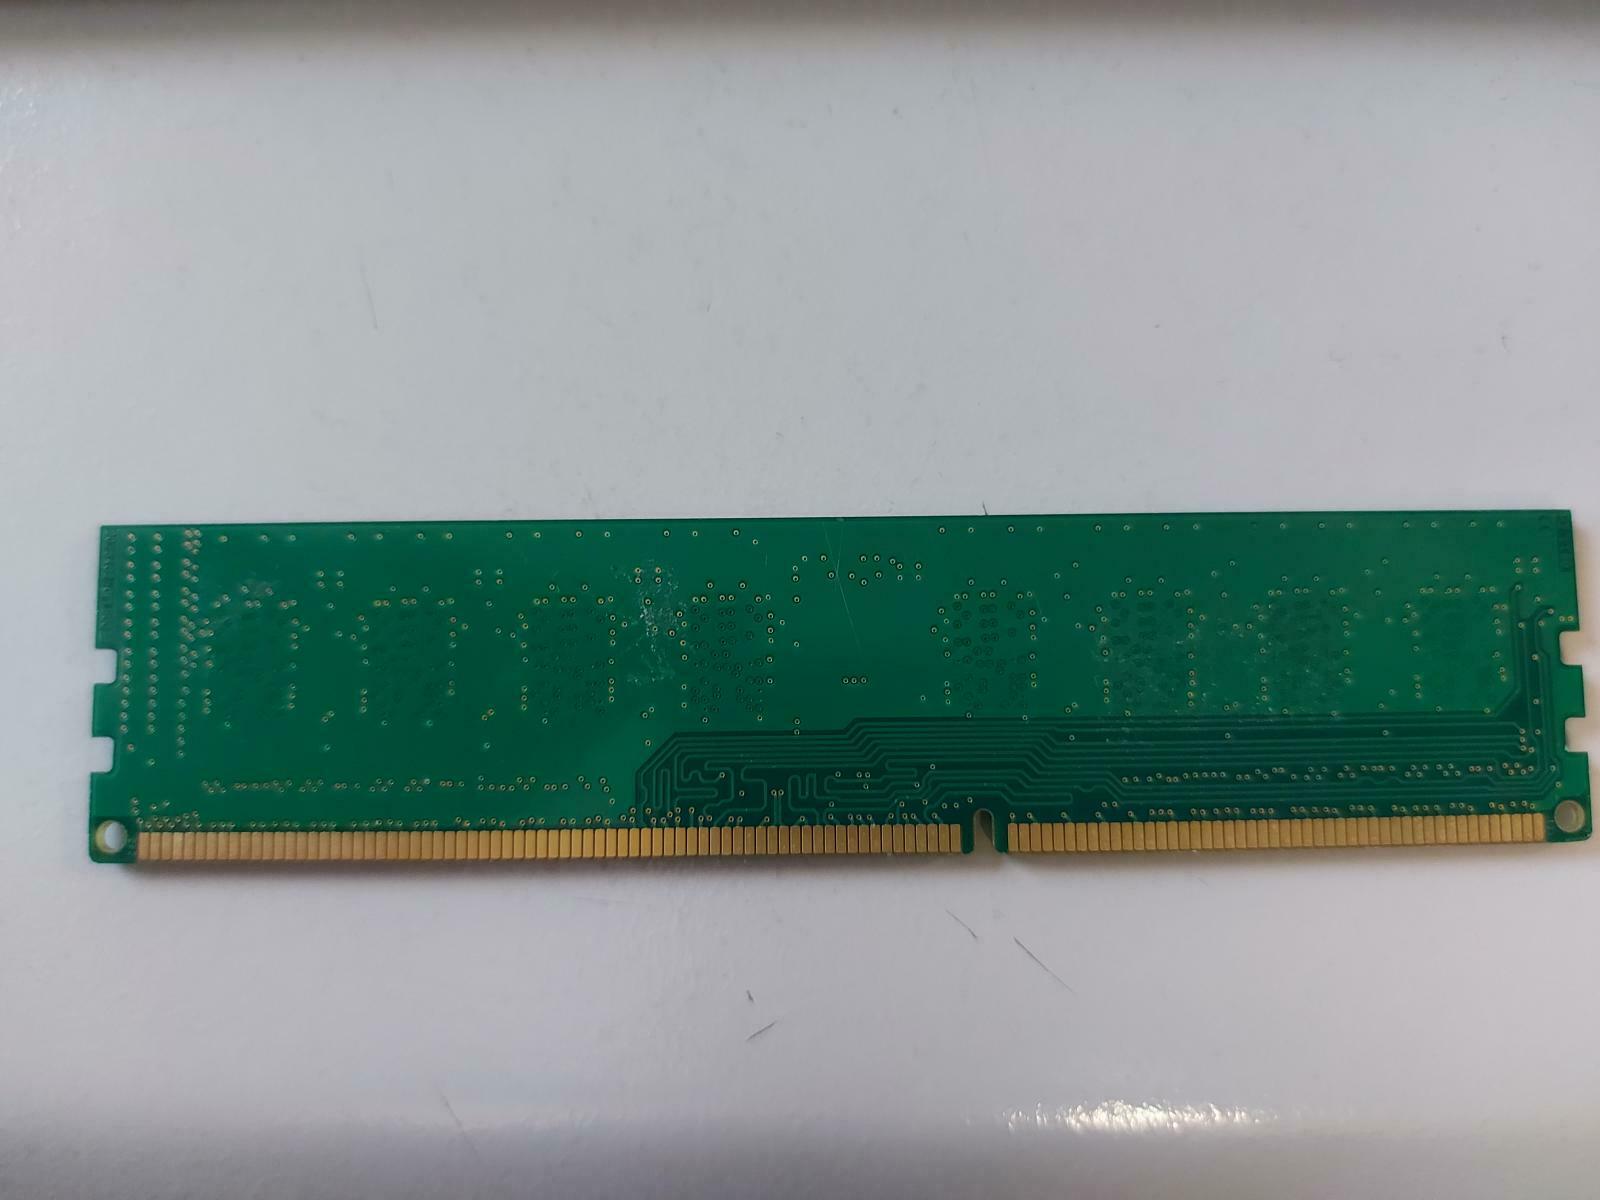 Mr Memory/ Buffalo 2GB nonECC PC3-10600 DDR3 DIMM Memory Module D3U1333/2G